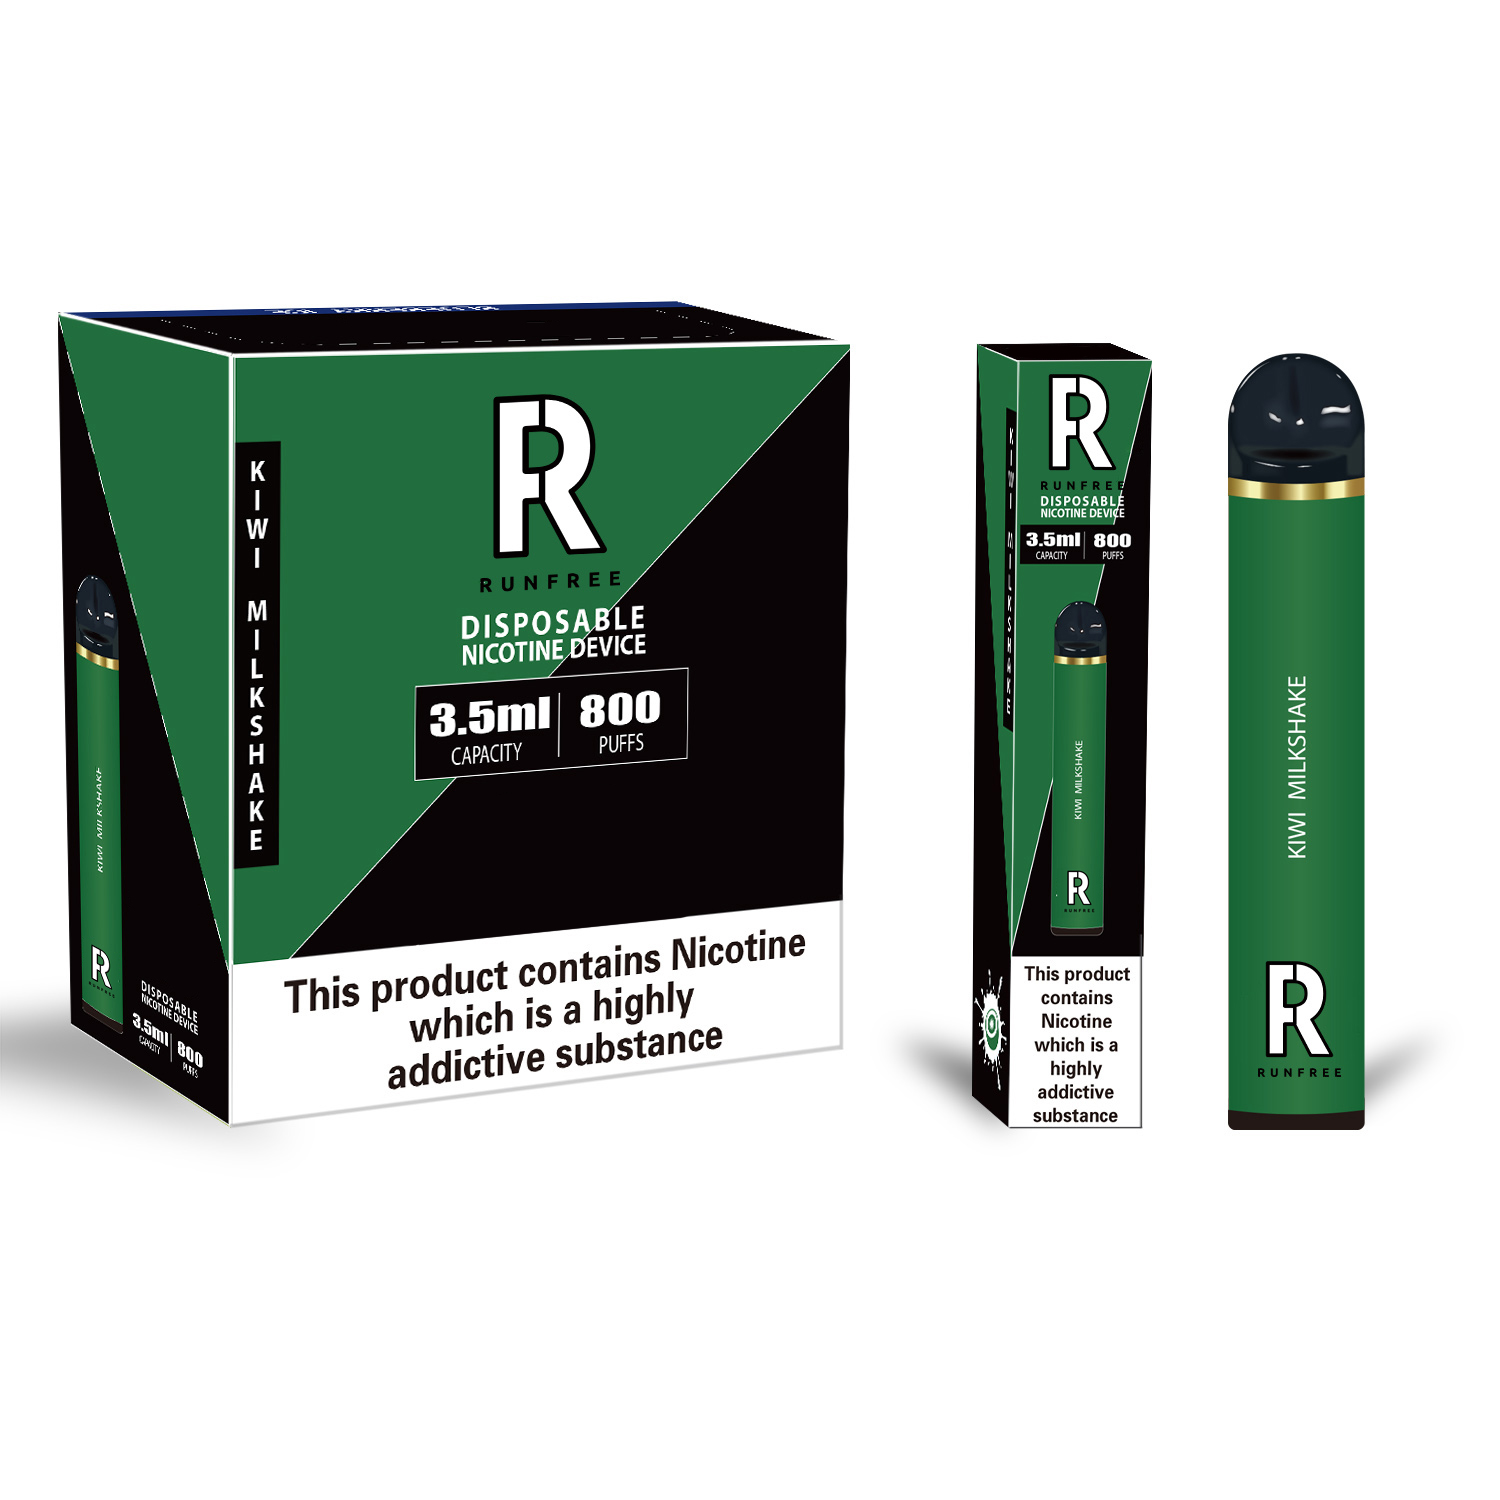 Runfree vaporizer pen for sale wholesale as gift-2